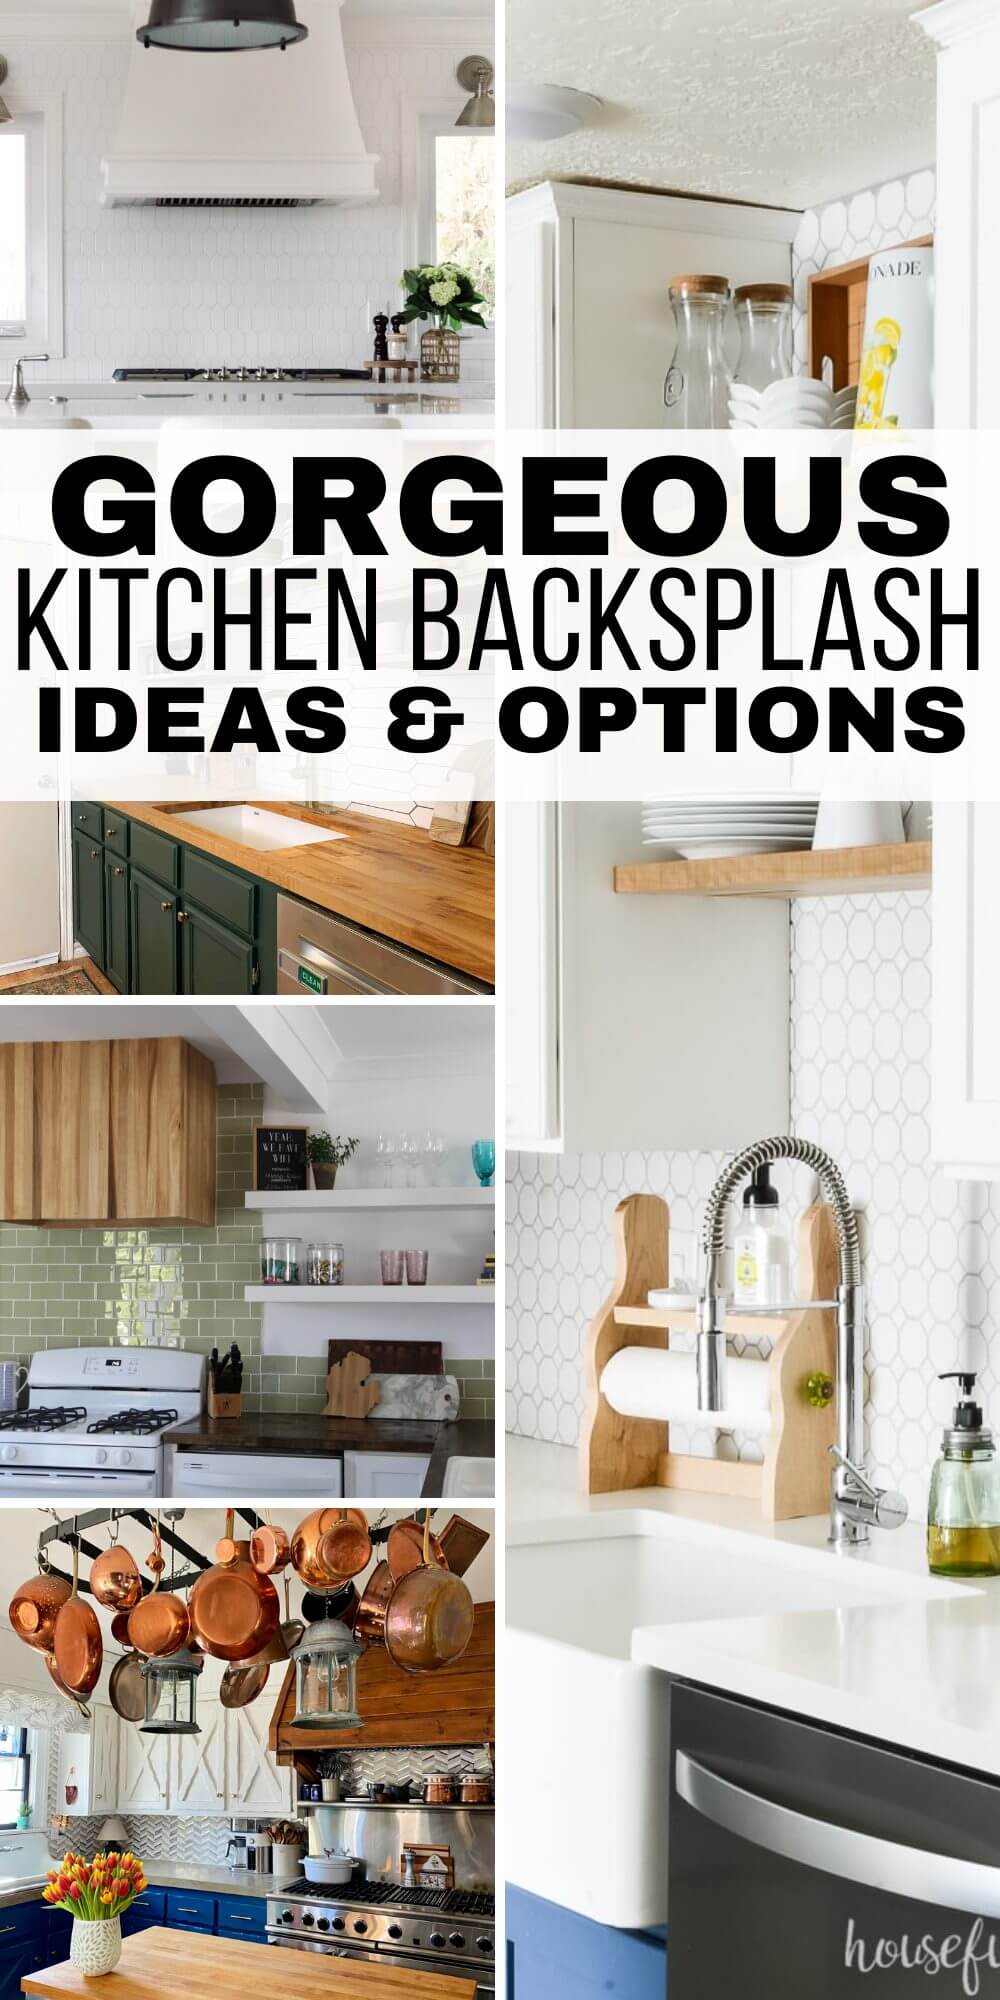 Kitchen backsplash ideas to fit all budgets